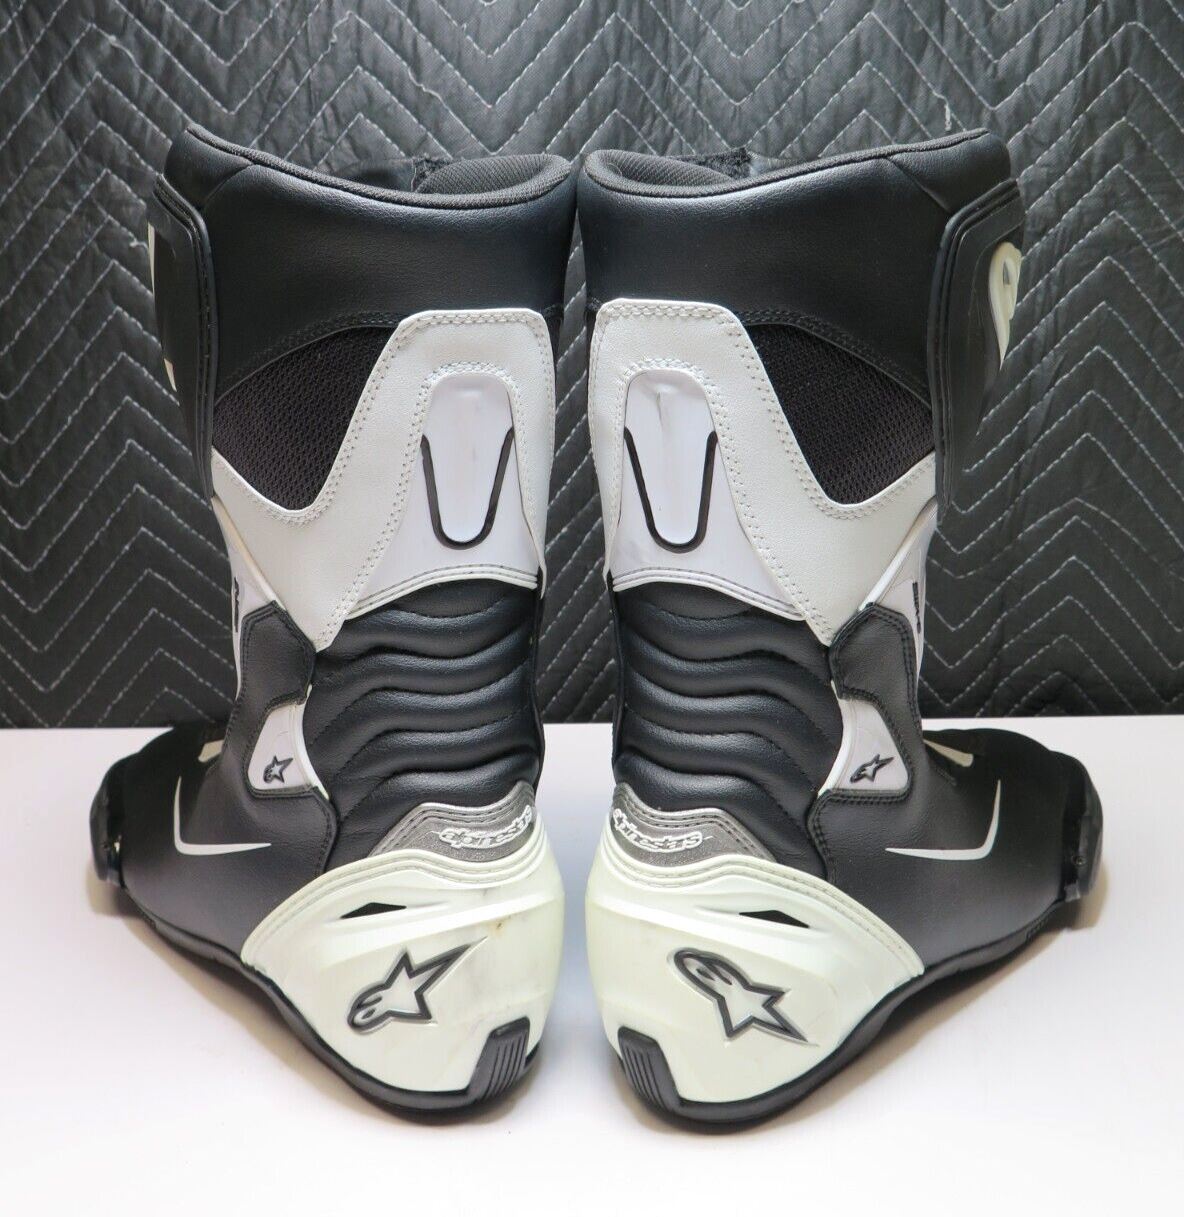 Alpinestars SMX S Men's Boots White/Black US Size 9.5 Euro 44